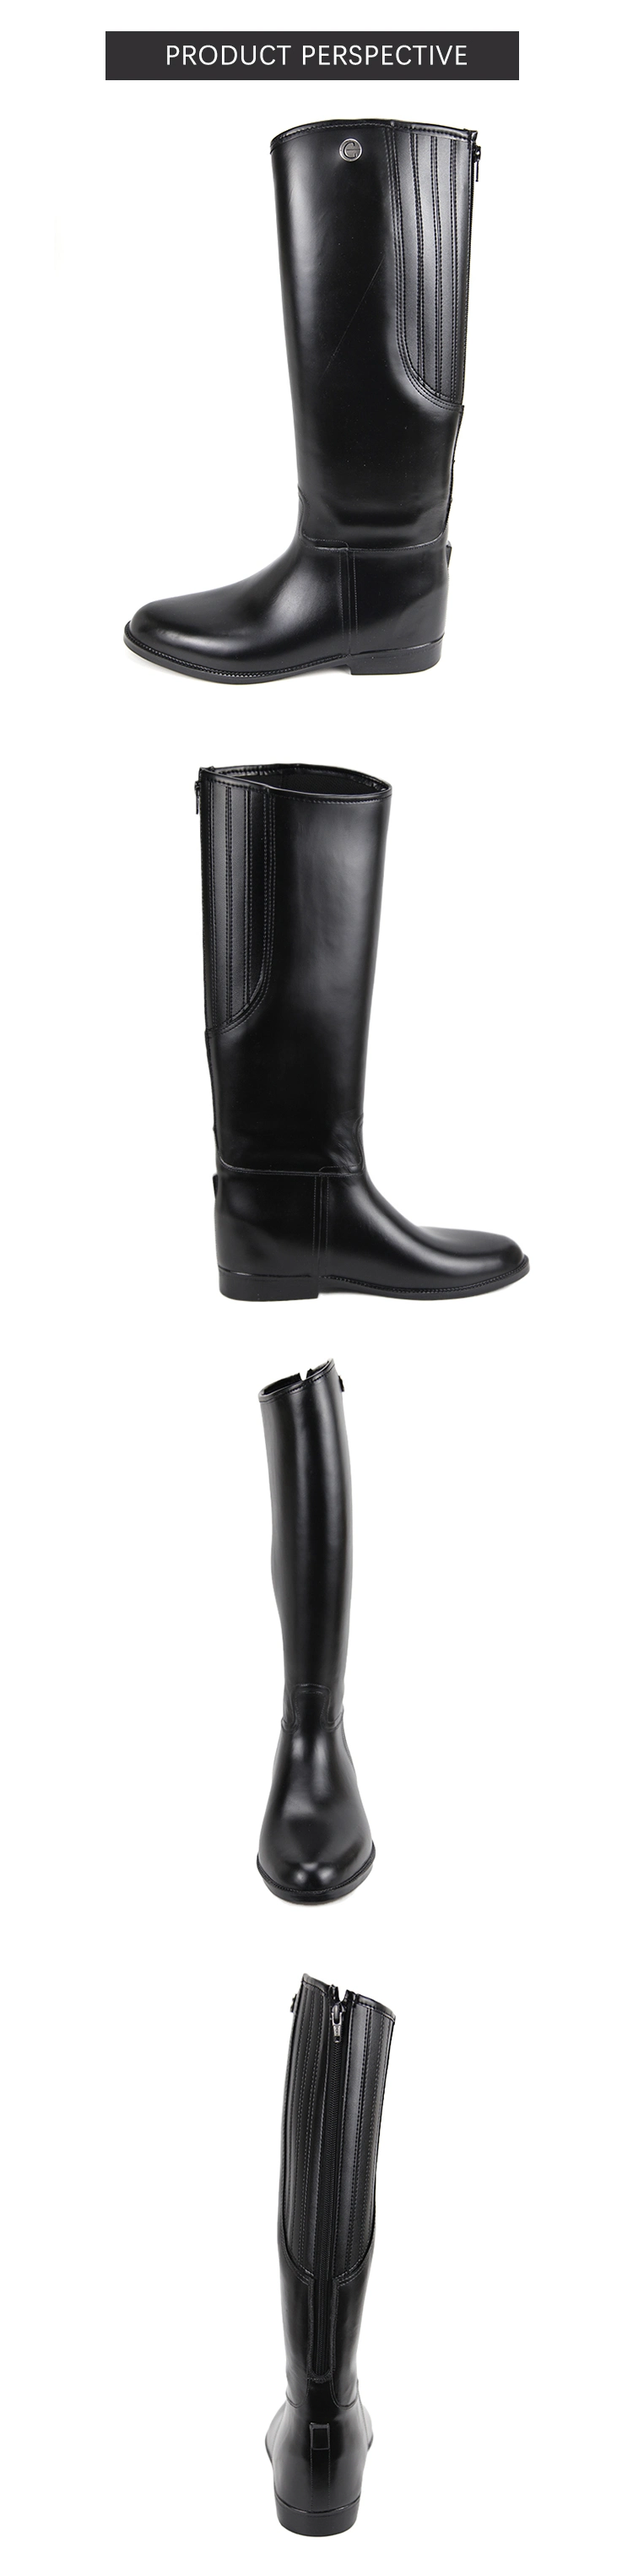 Wholesale Trendy Women Rain Boots Skidproof Wellies Outdoor Riding Boots